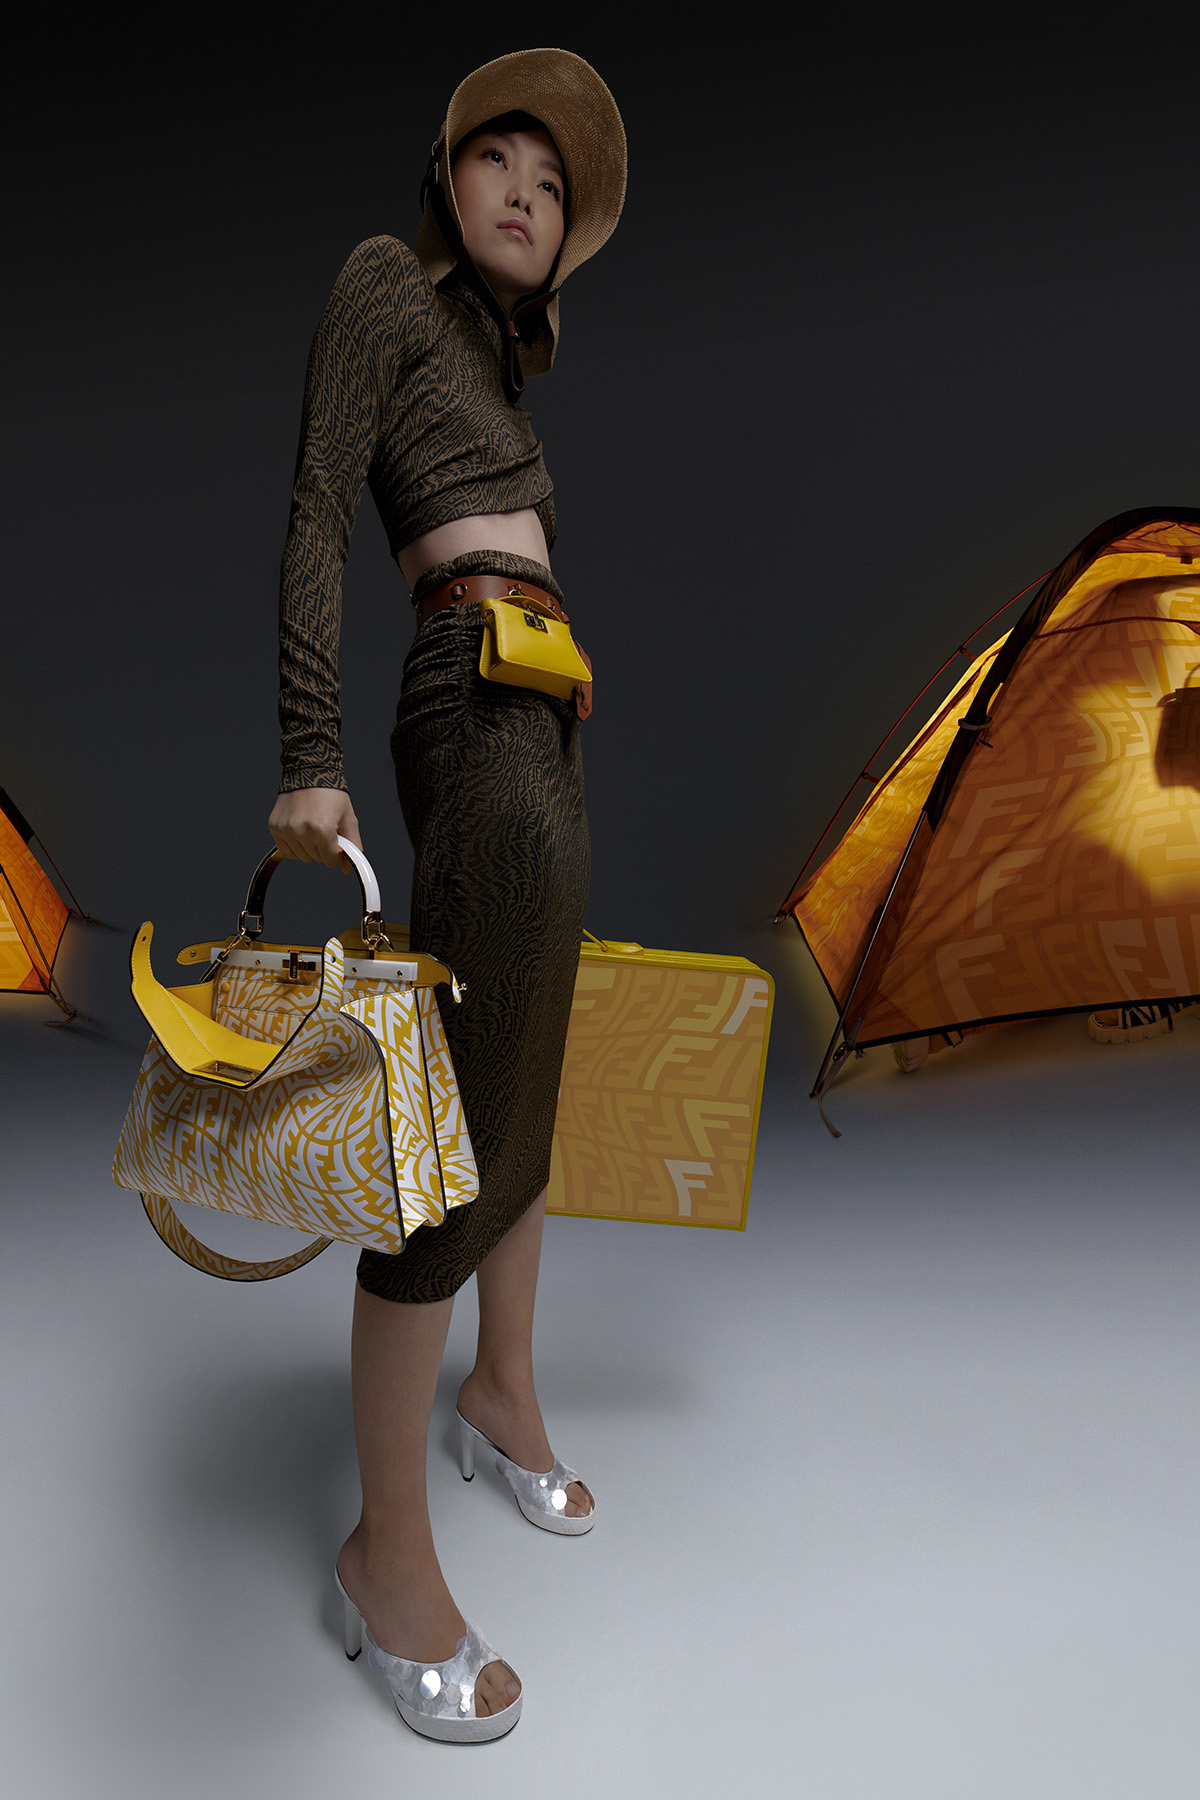 Kaia Gerber for Louis Vuitton's Twist Bags